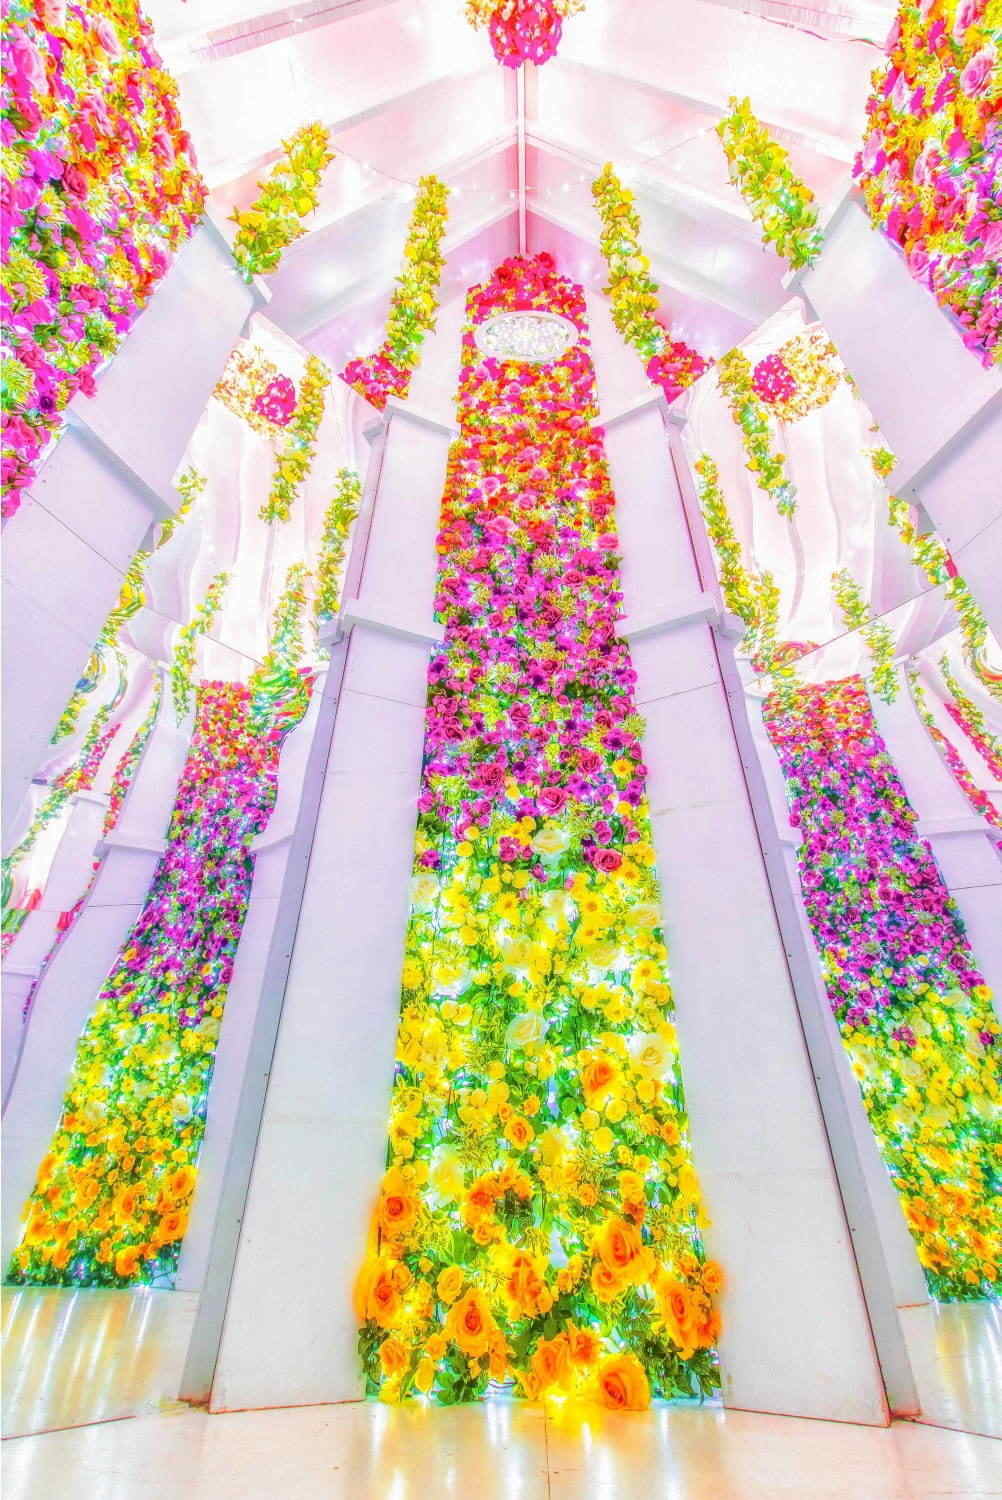 Ashikaga Flower Park Illumination 2020 6 - flower castle